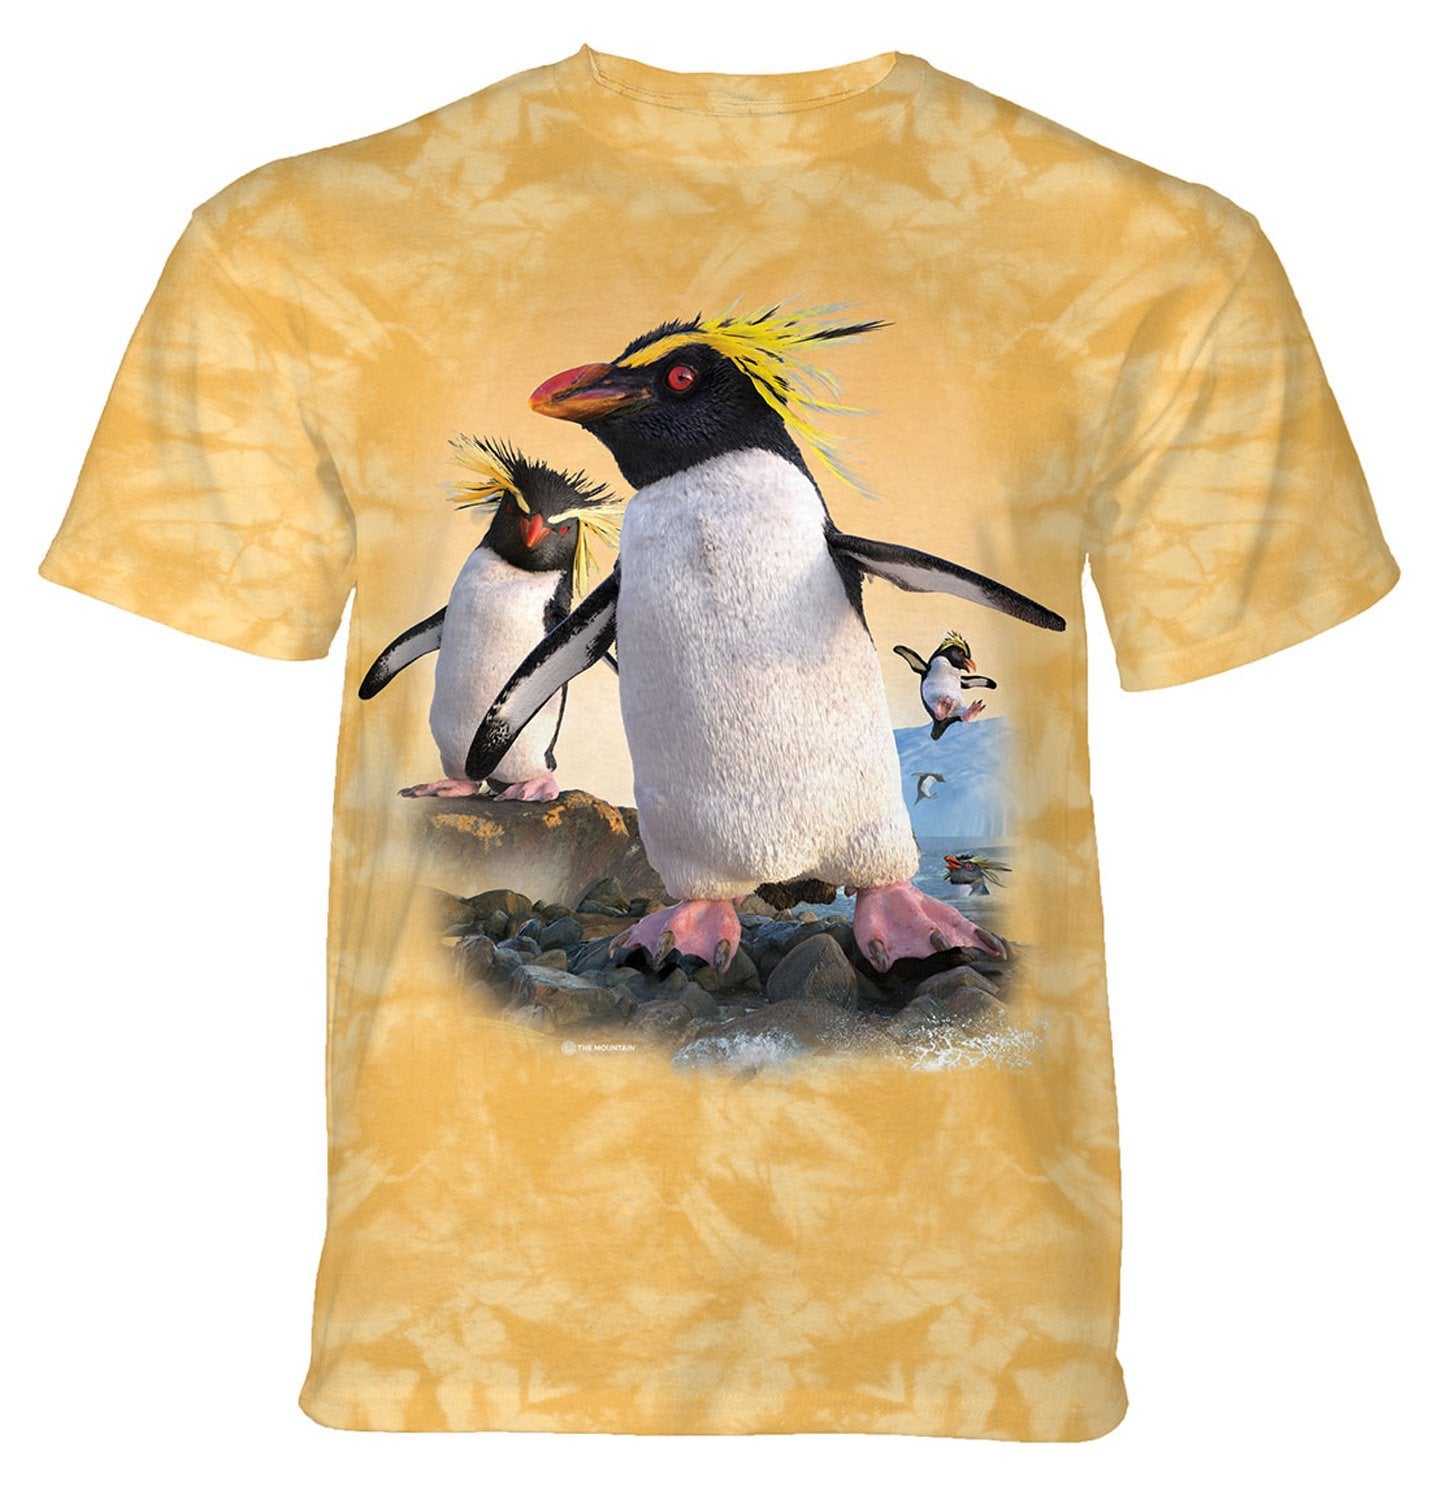 The Mountain - Rockhopper Penguins - Adult Unisex T-Shirt